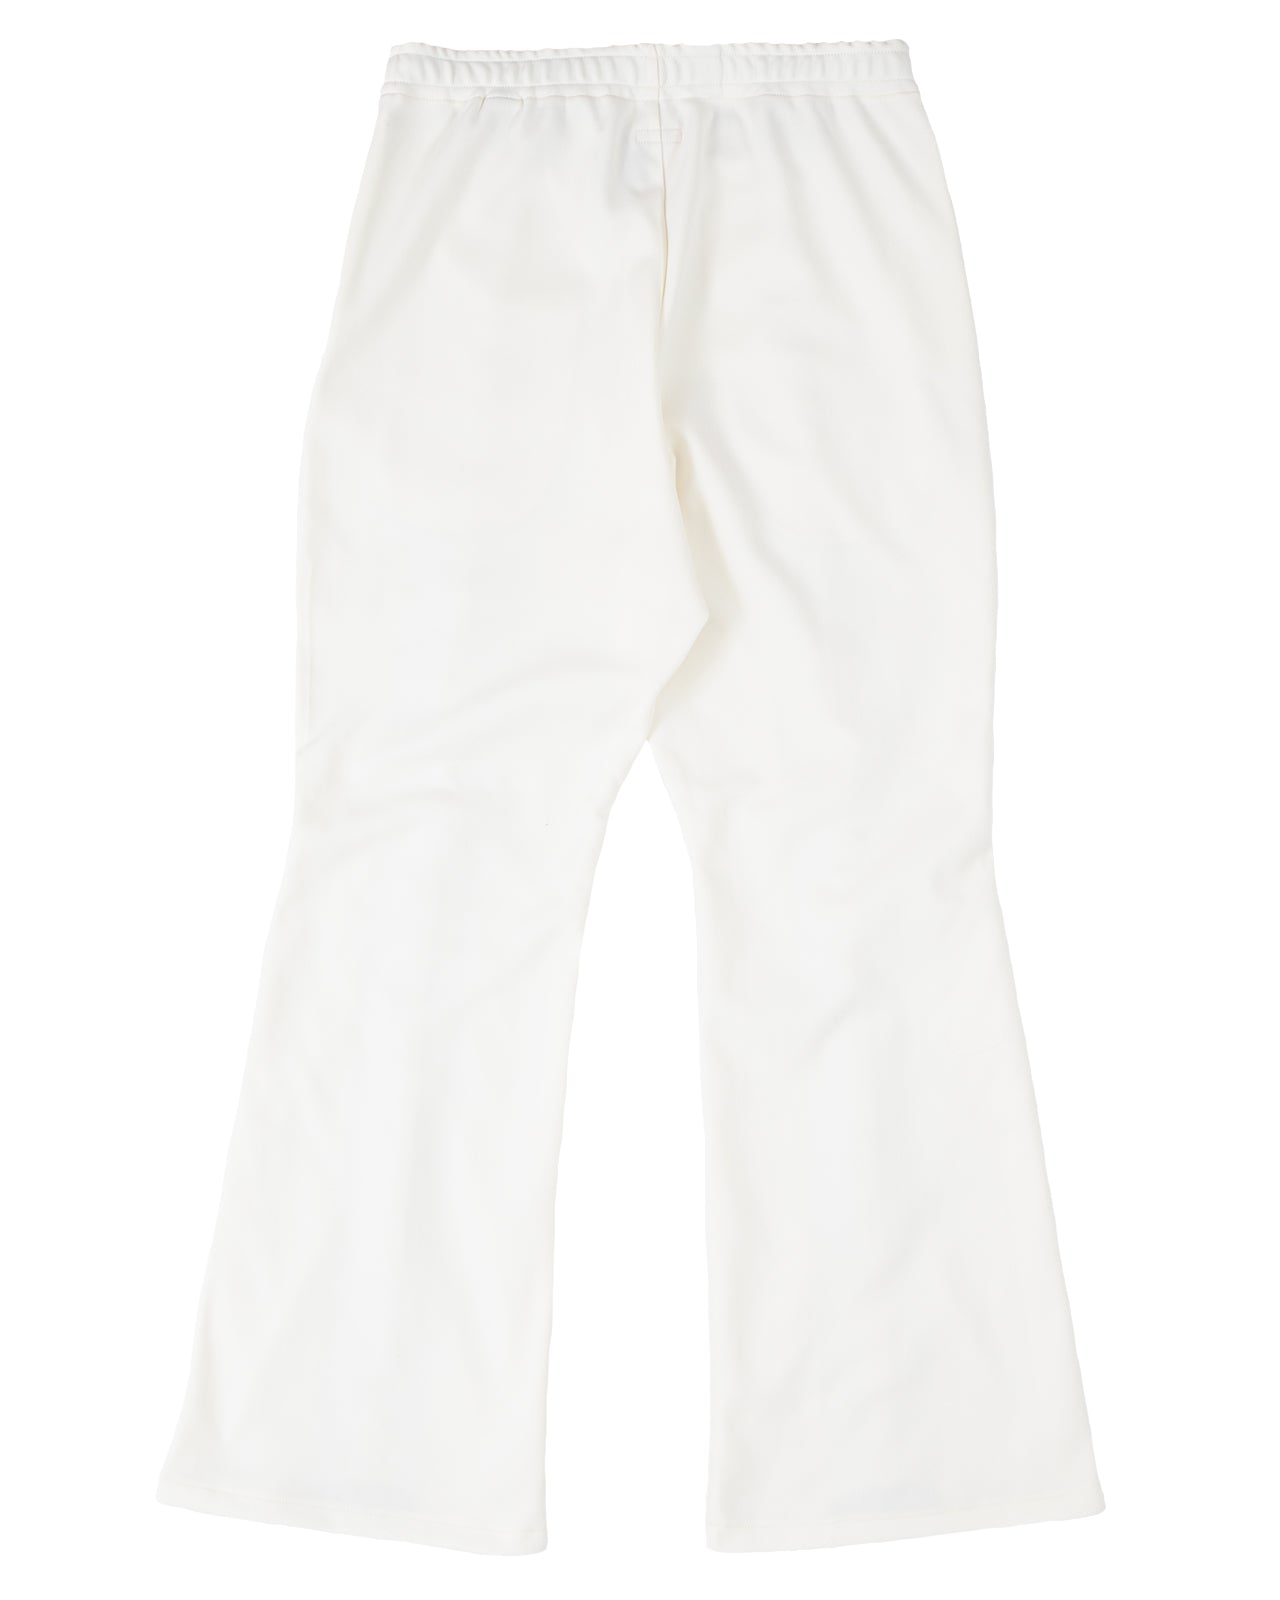 Kapital Smooth Jersey Kochi & Zephyr Track Pants (Front Line), White